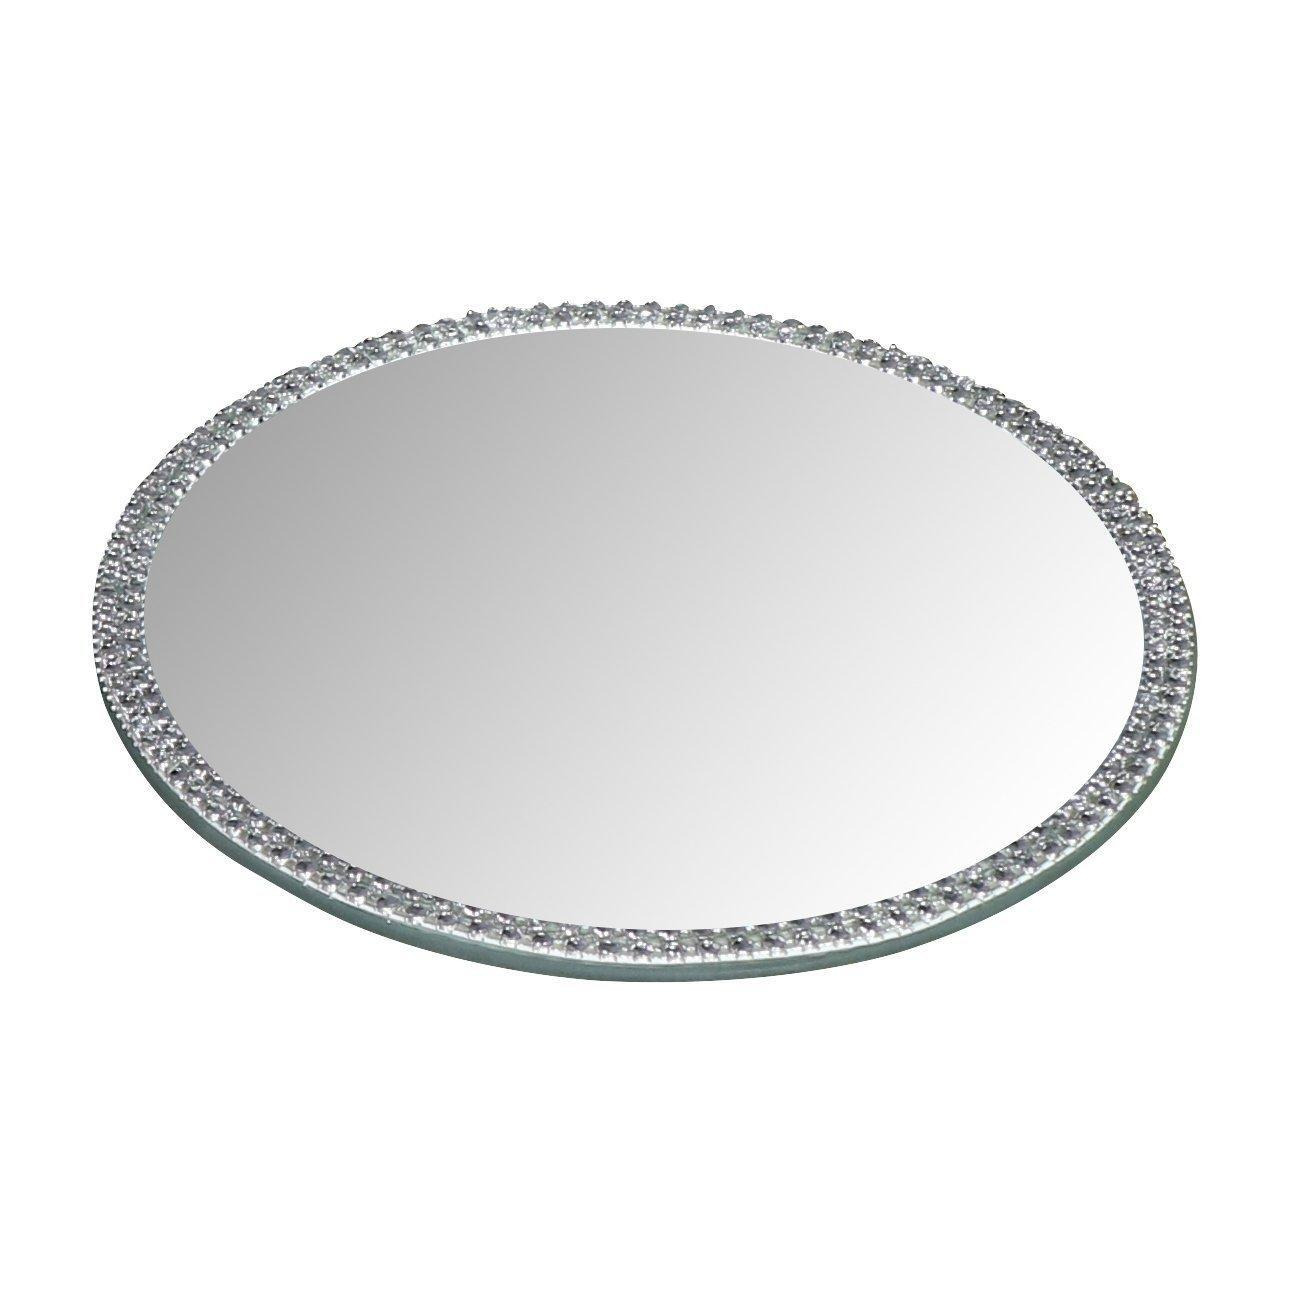 Jewelled Mirrored Display Plate - image 1